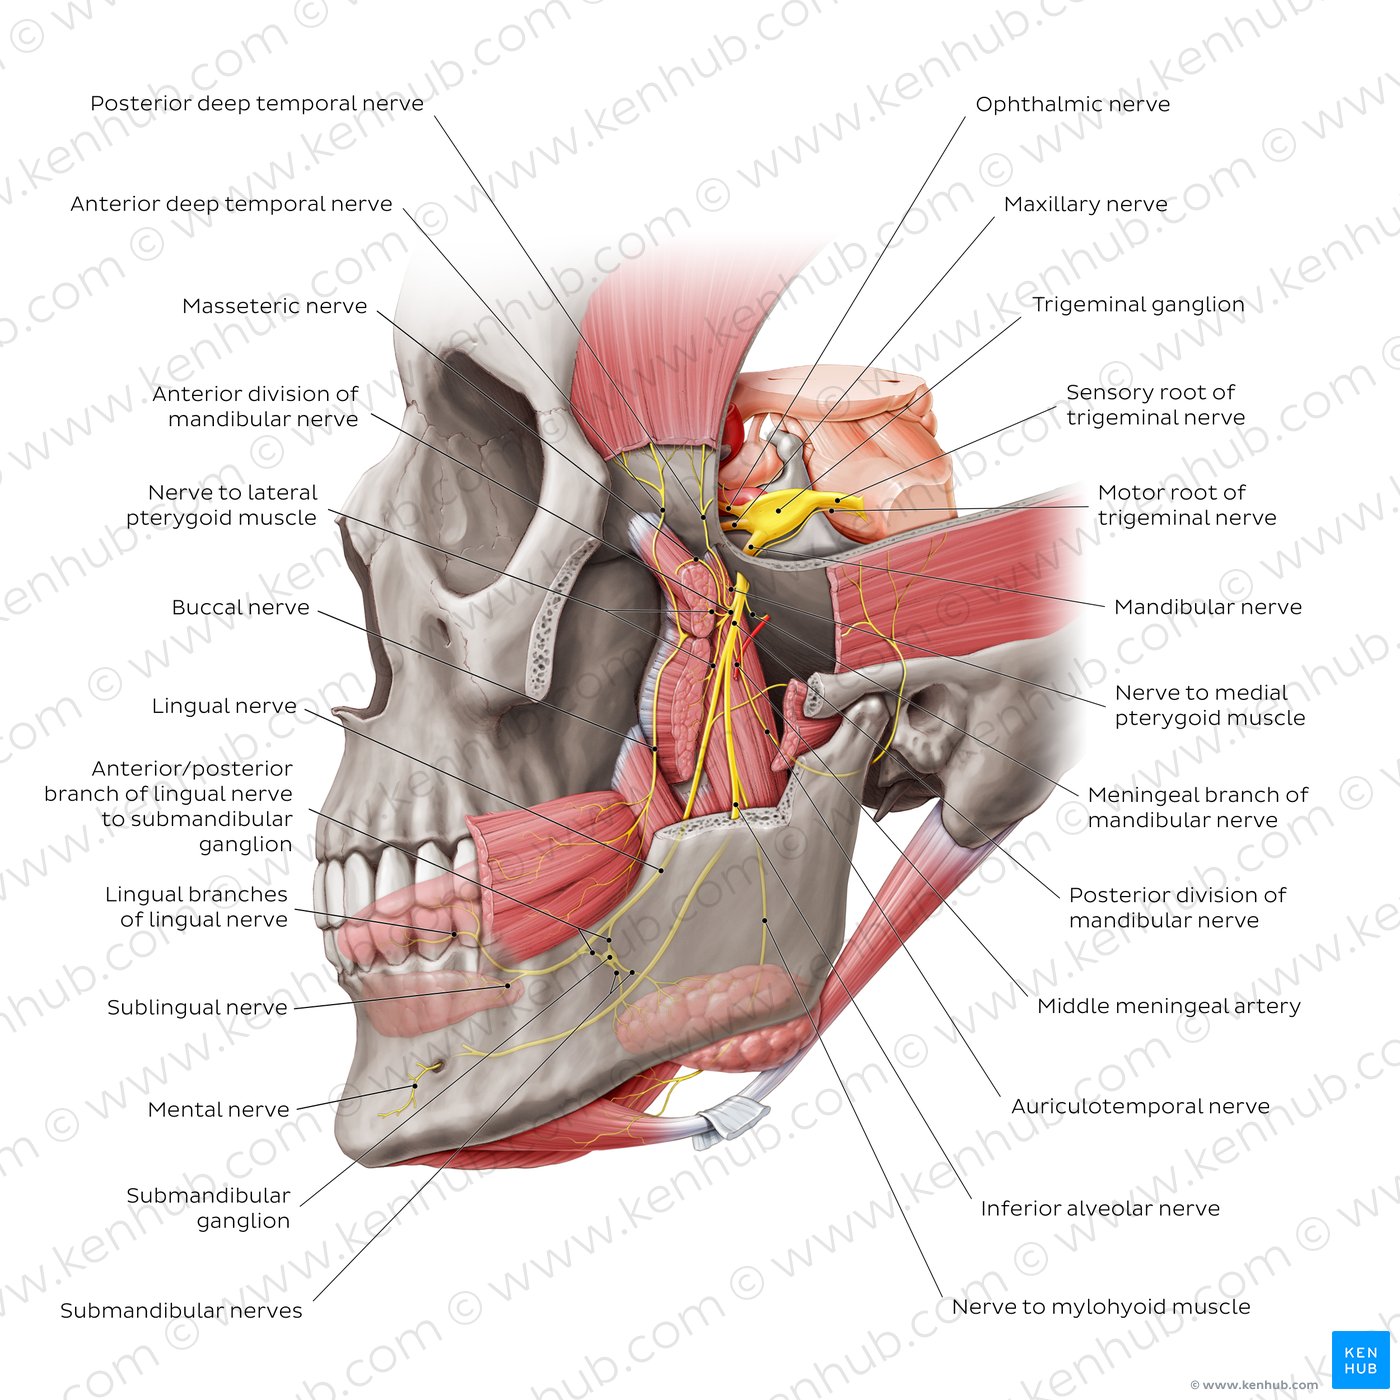 Origin and course of the mandibular nerve